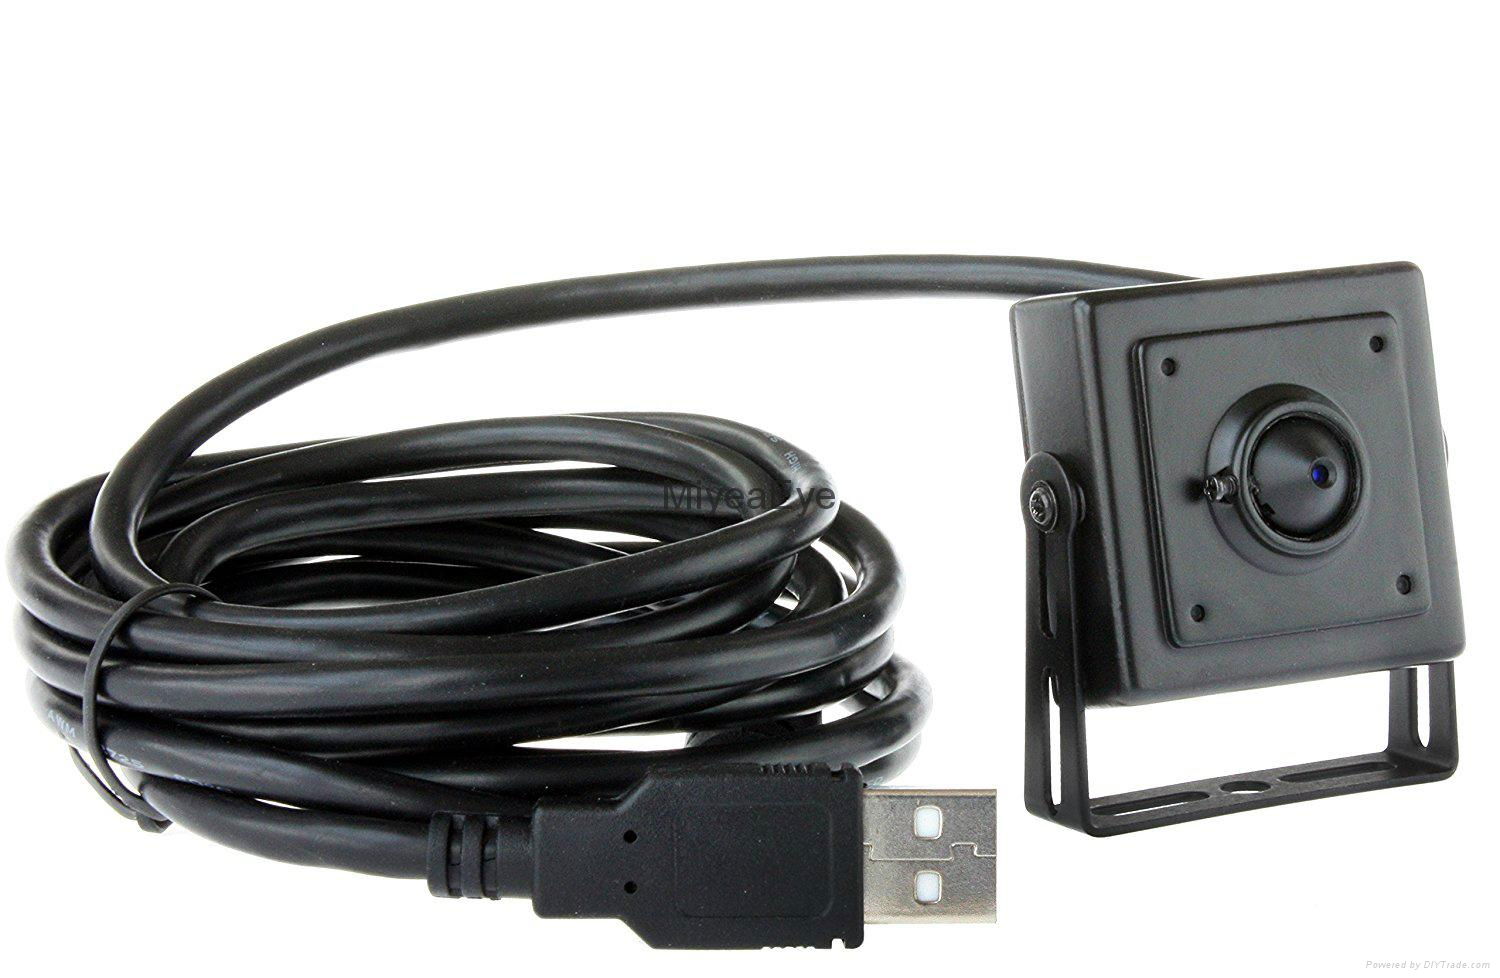 1.3MP USB Color Pinhole Camera for atm machine with vivid Image 4